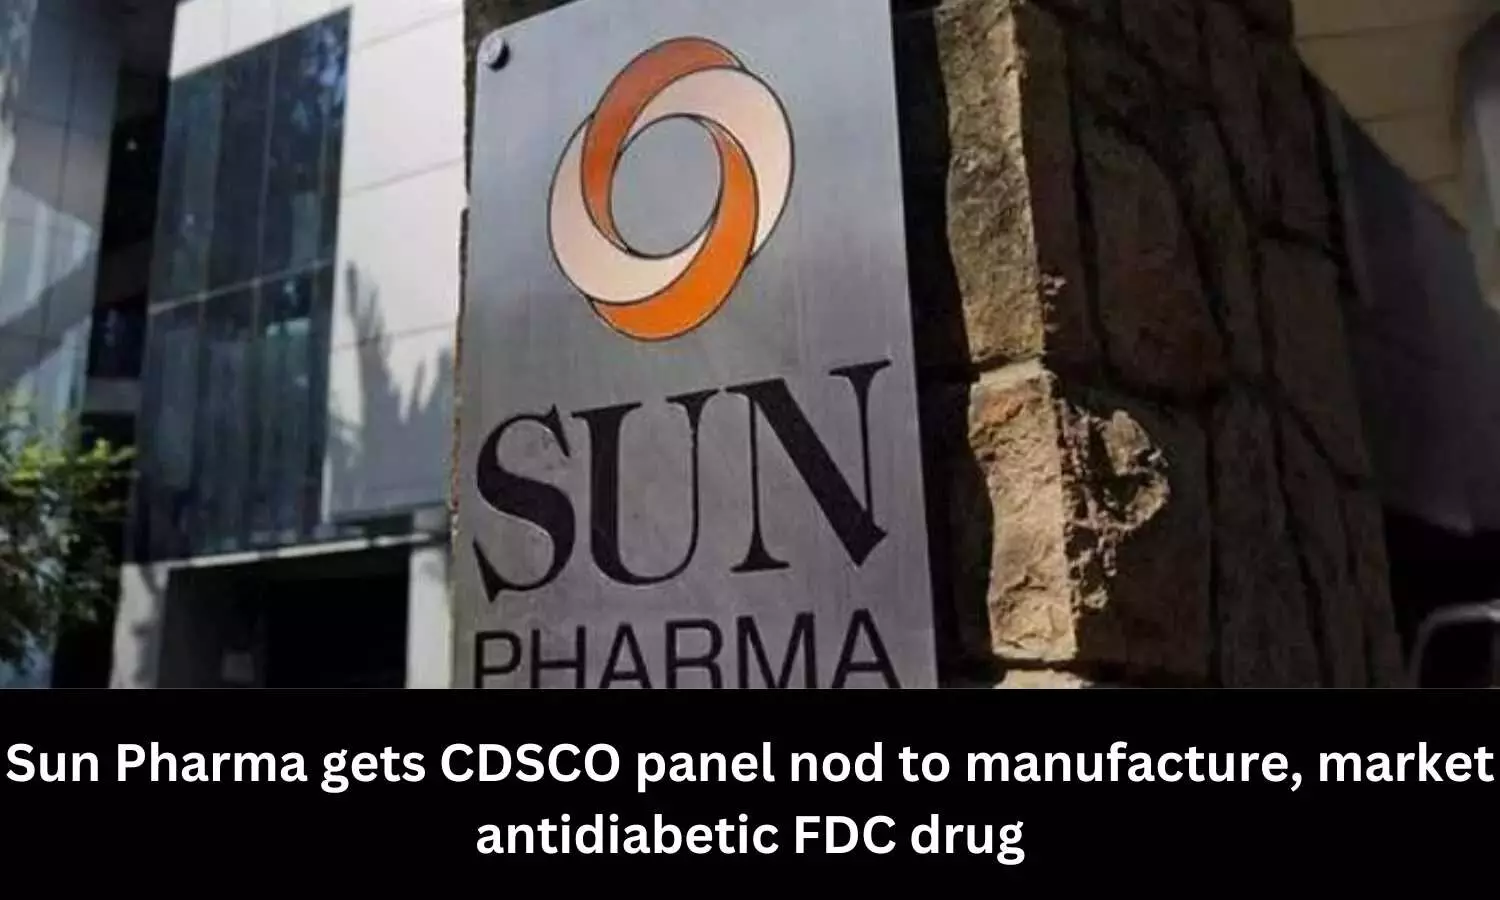 CDSCO panel nod to Sun Pharma to manufacture, market antidiabetic FDC drug